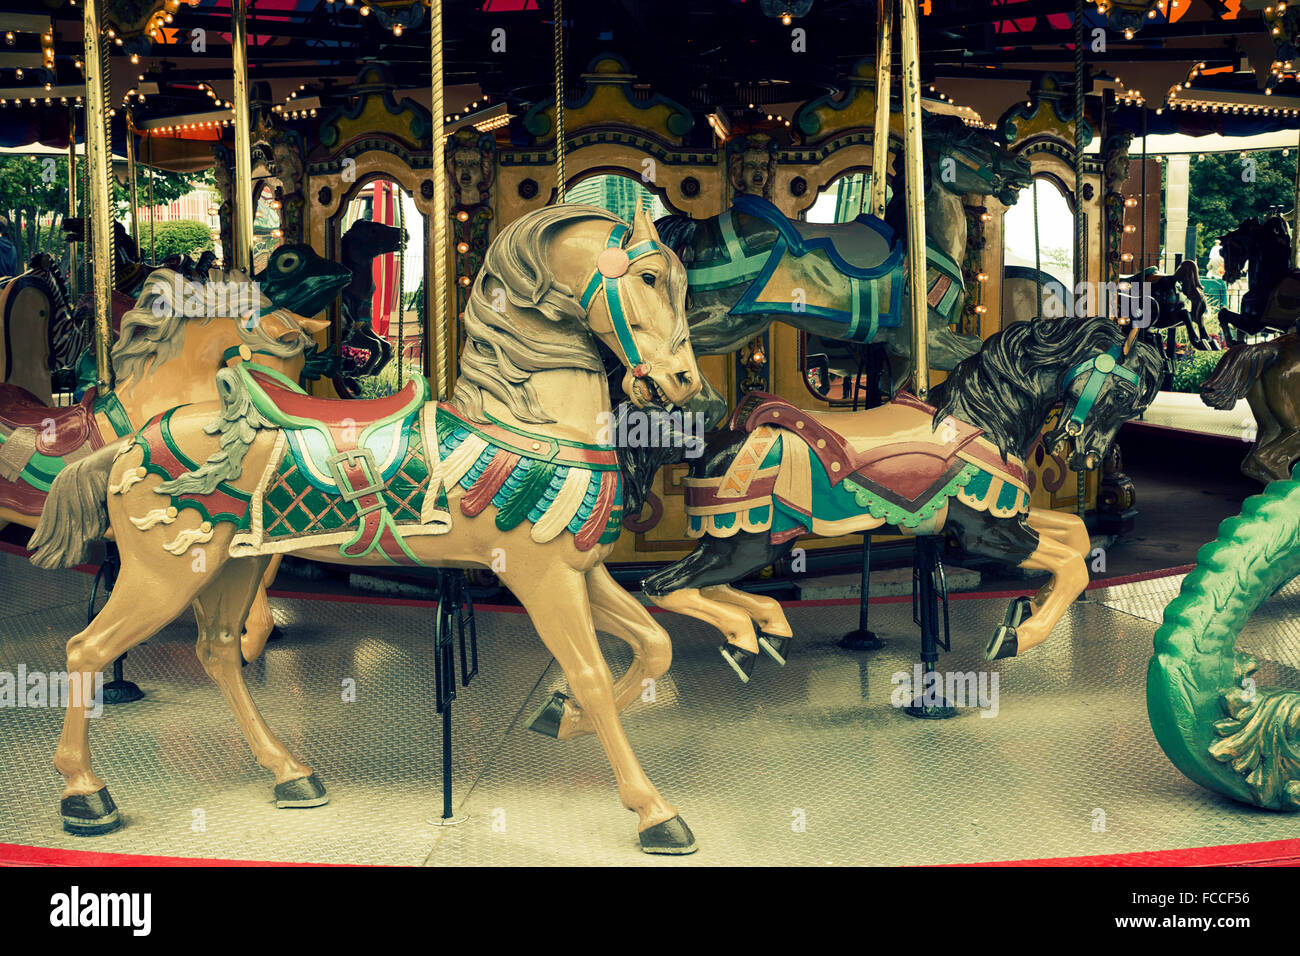 Old carousel horse Stock Photo